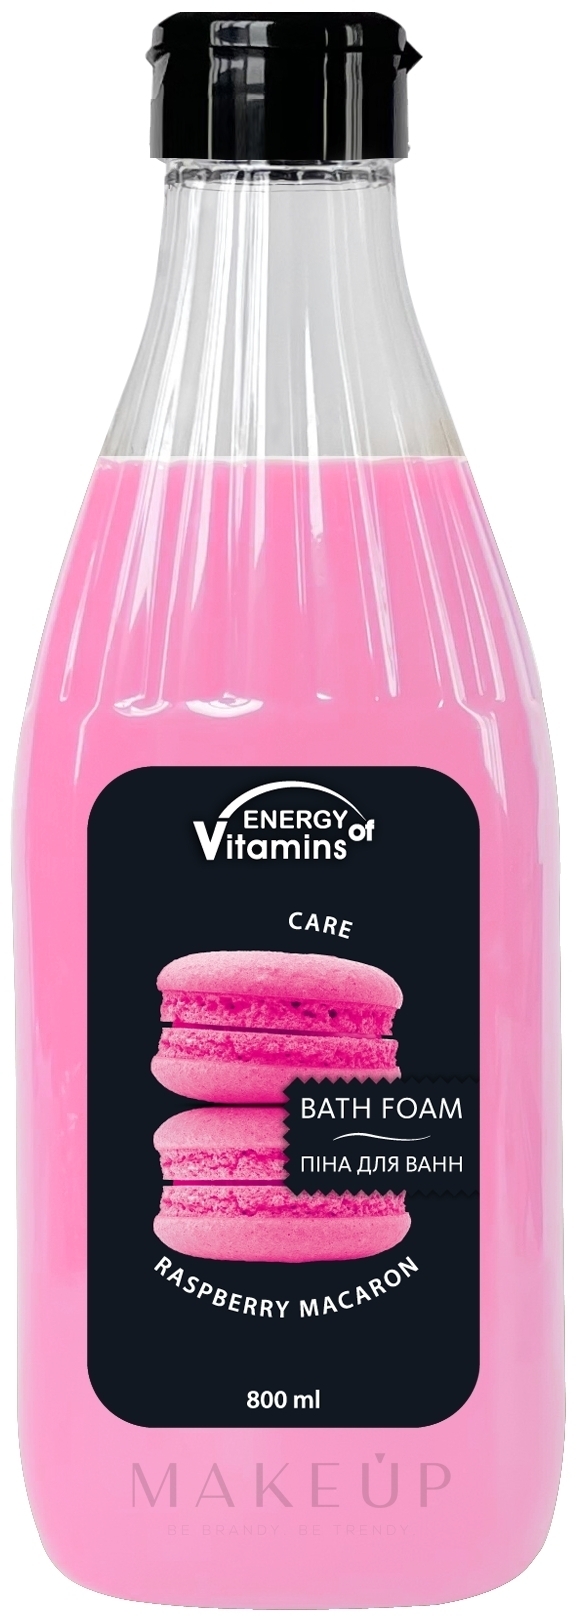 Verjüngender Badeschaum mit Himbeerduft - Leckere Geheimnisse Energy of Vitamins — Foto 800 ml